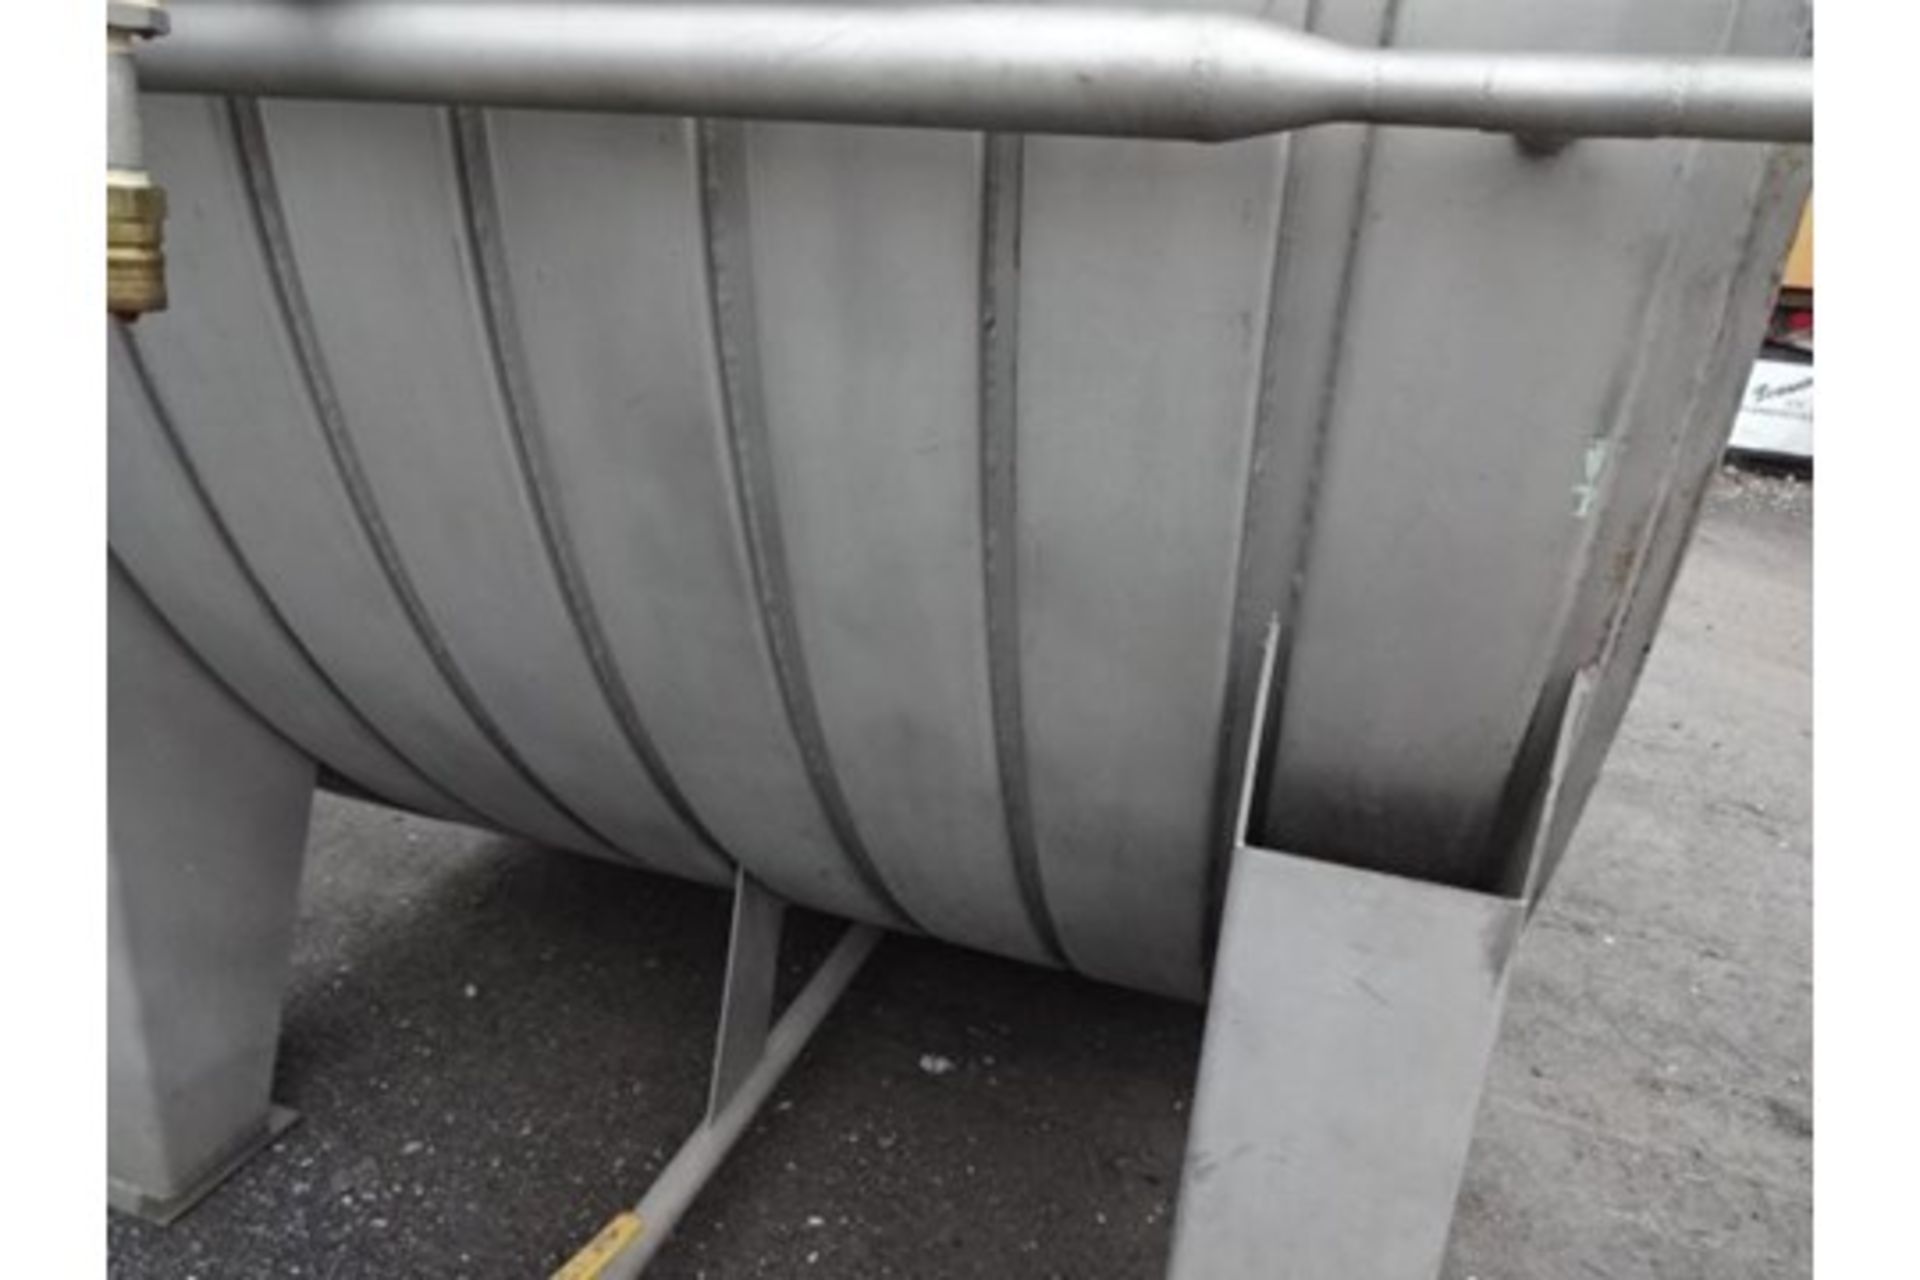 Double wall stainless steel basin - Bassin double paroies en inox - Image 5 of 7